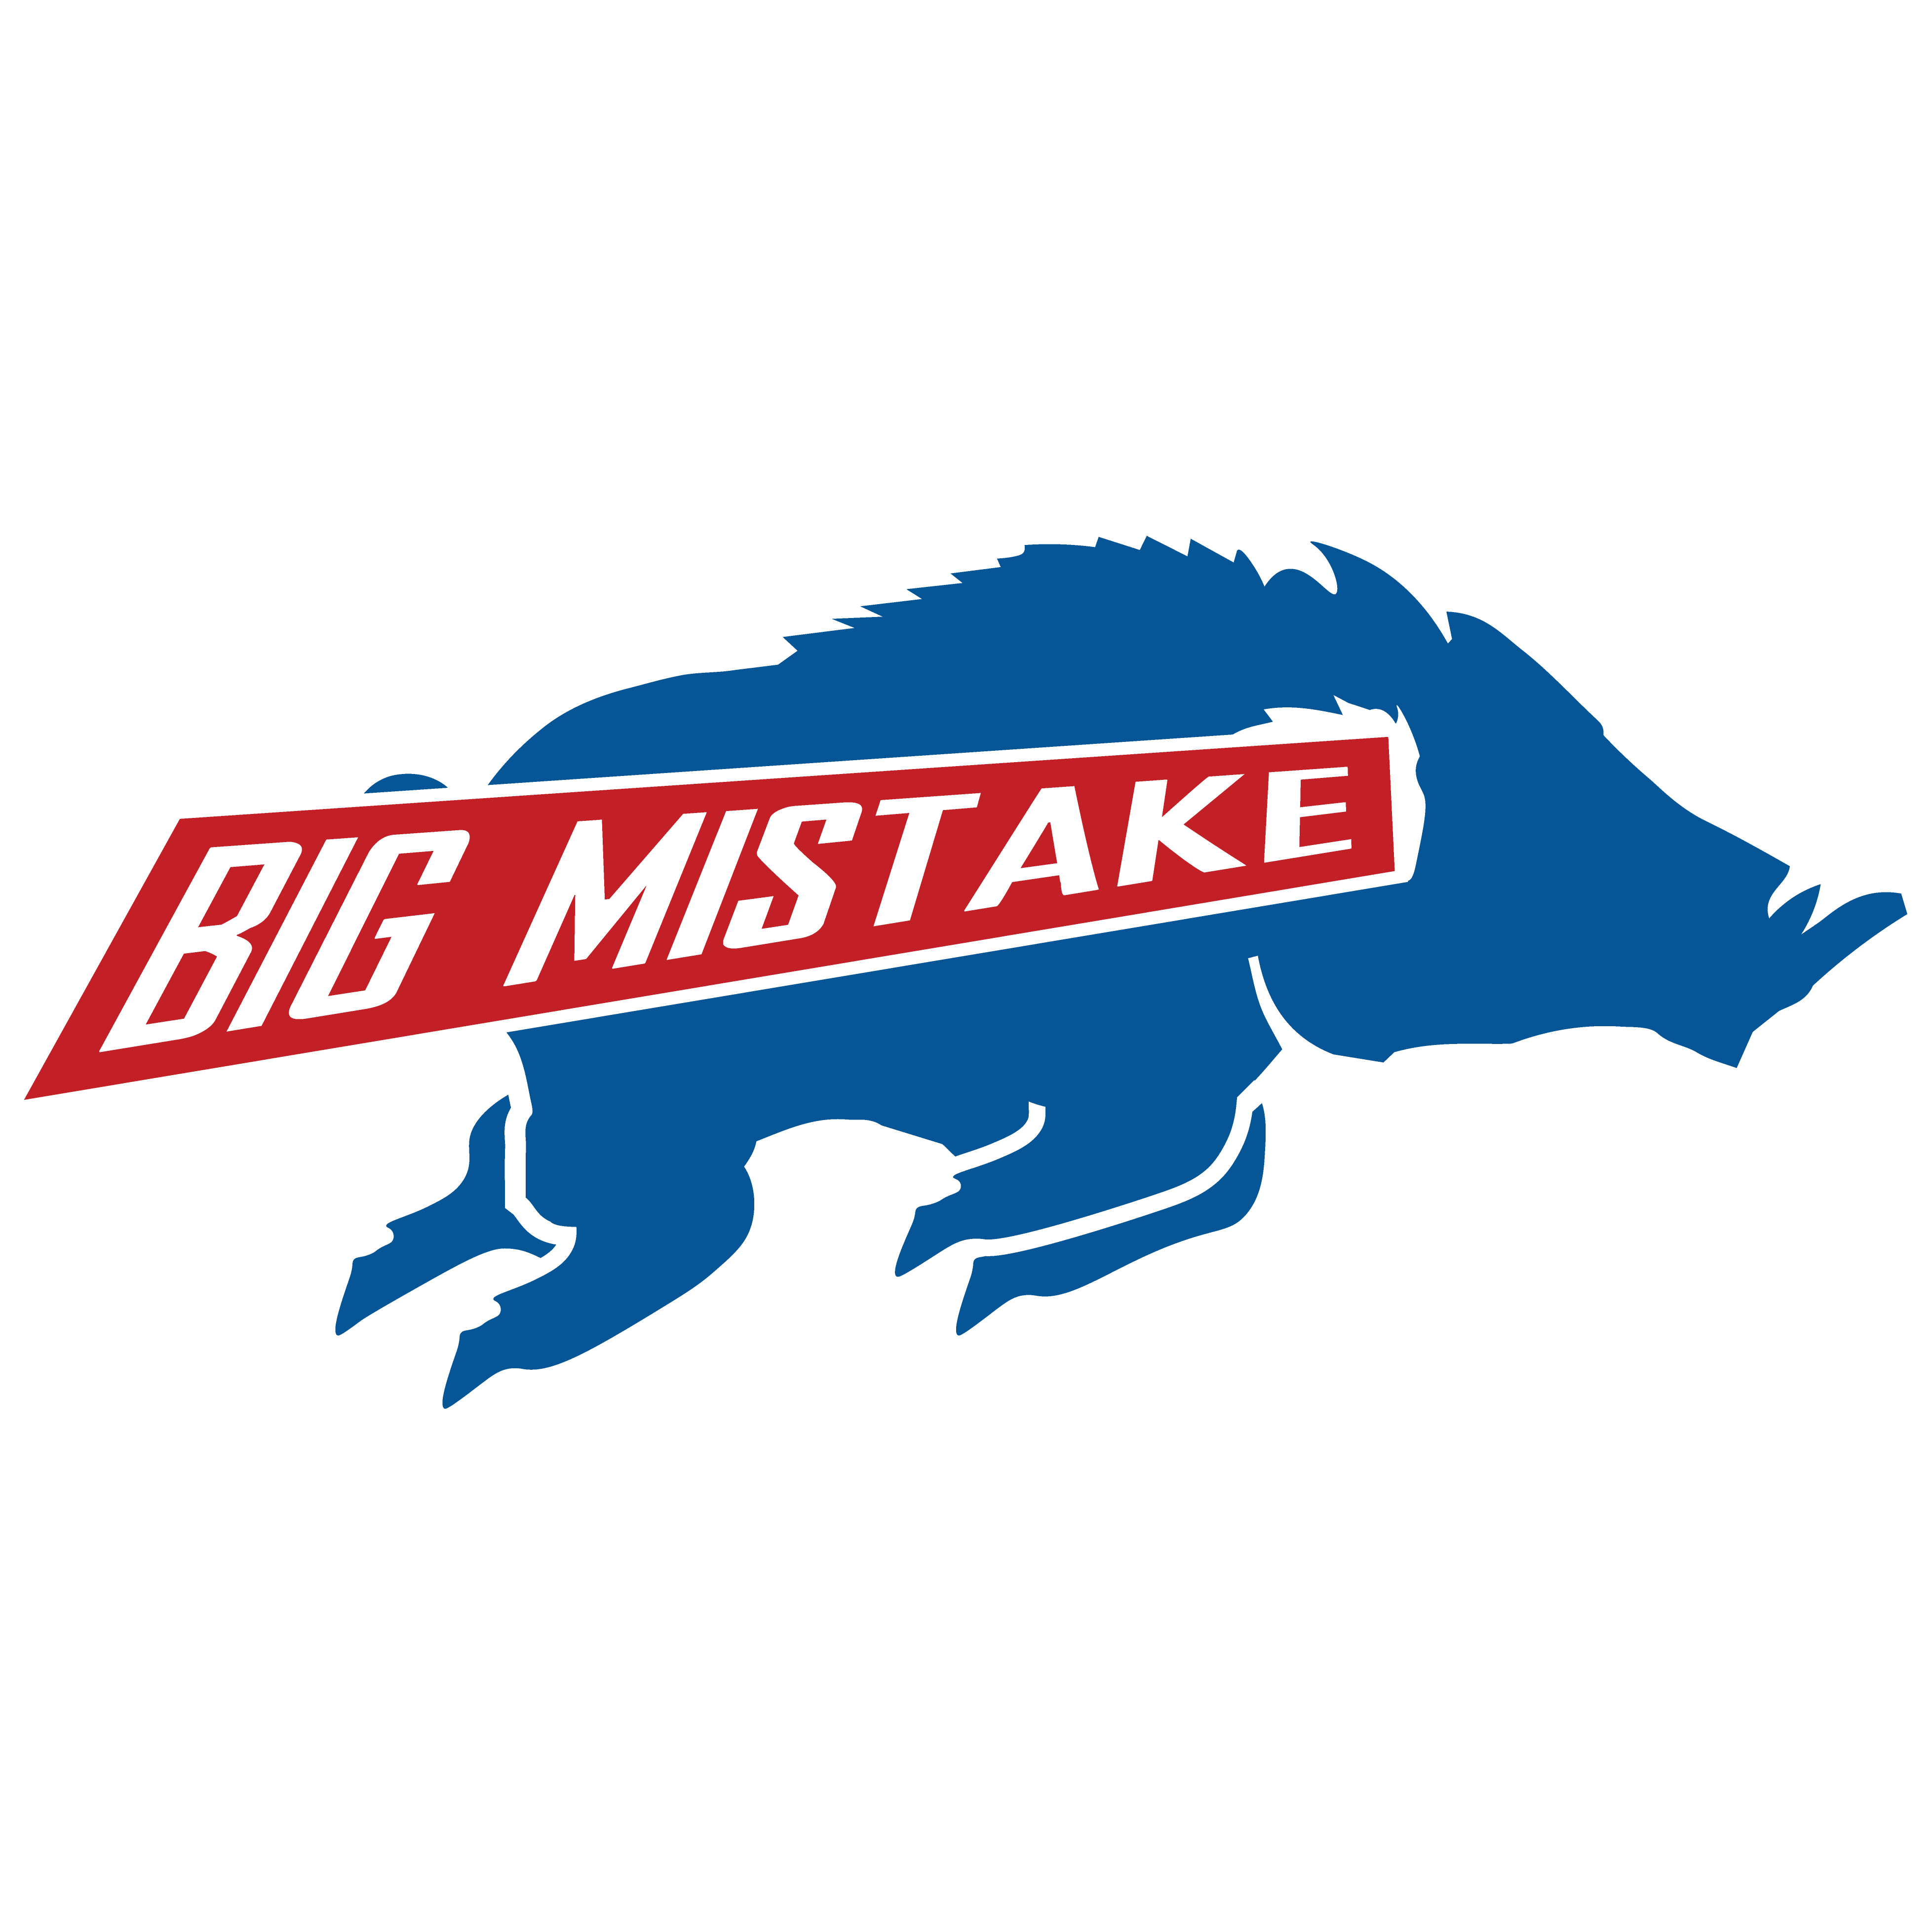 BIG Mistake